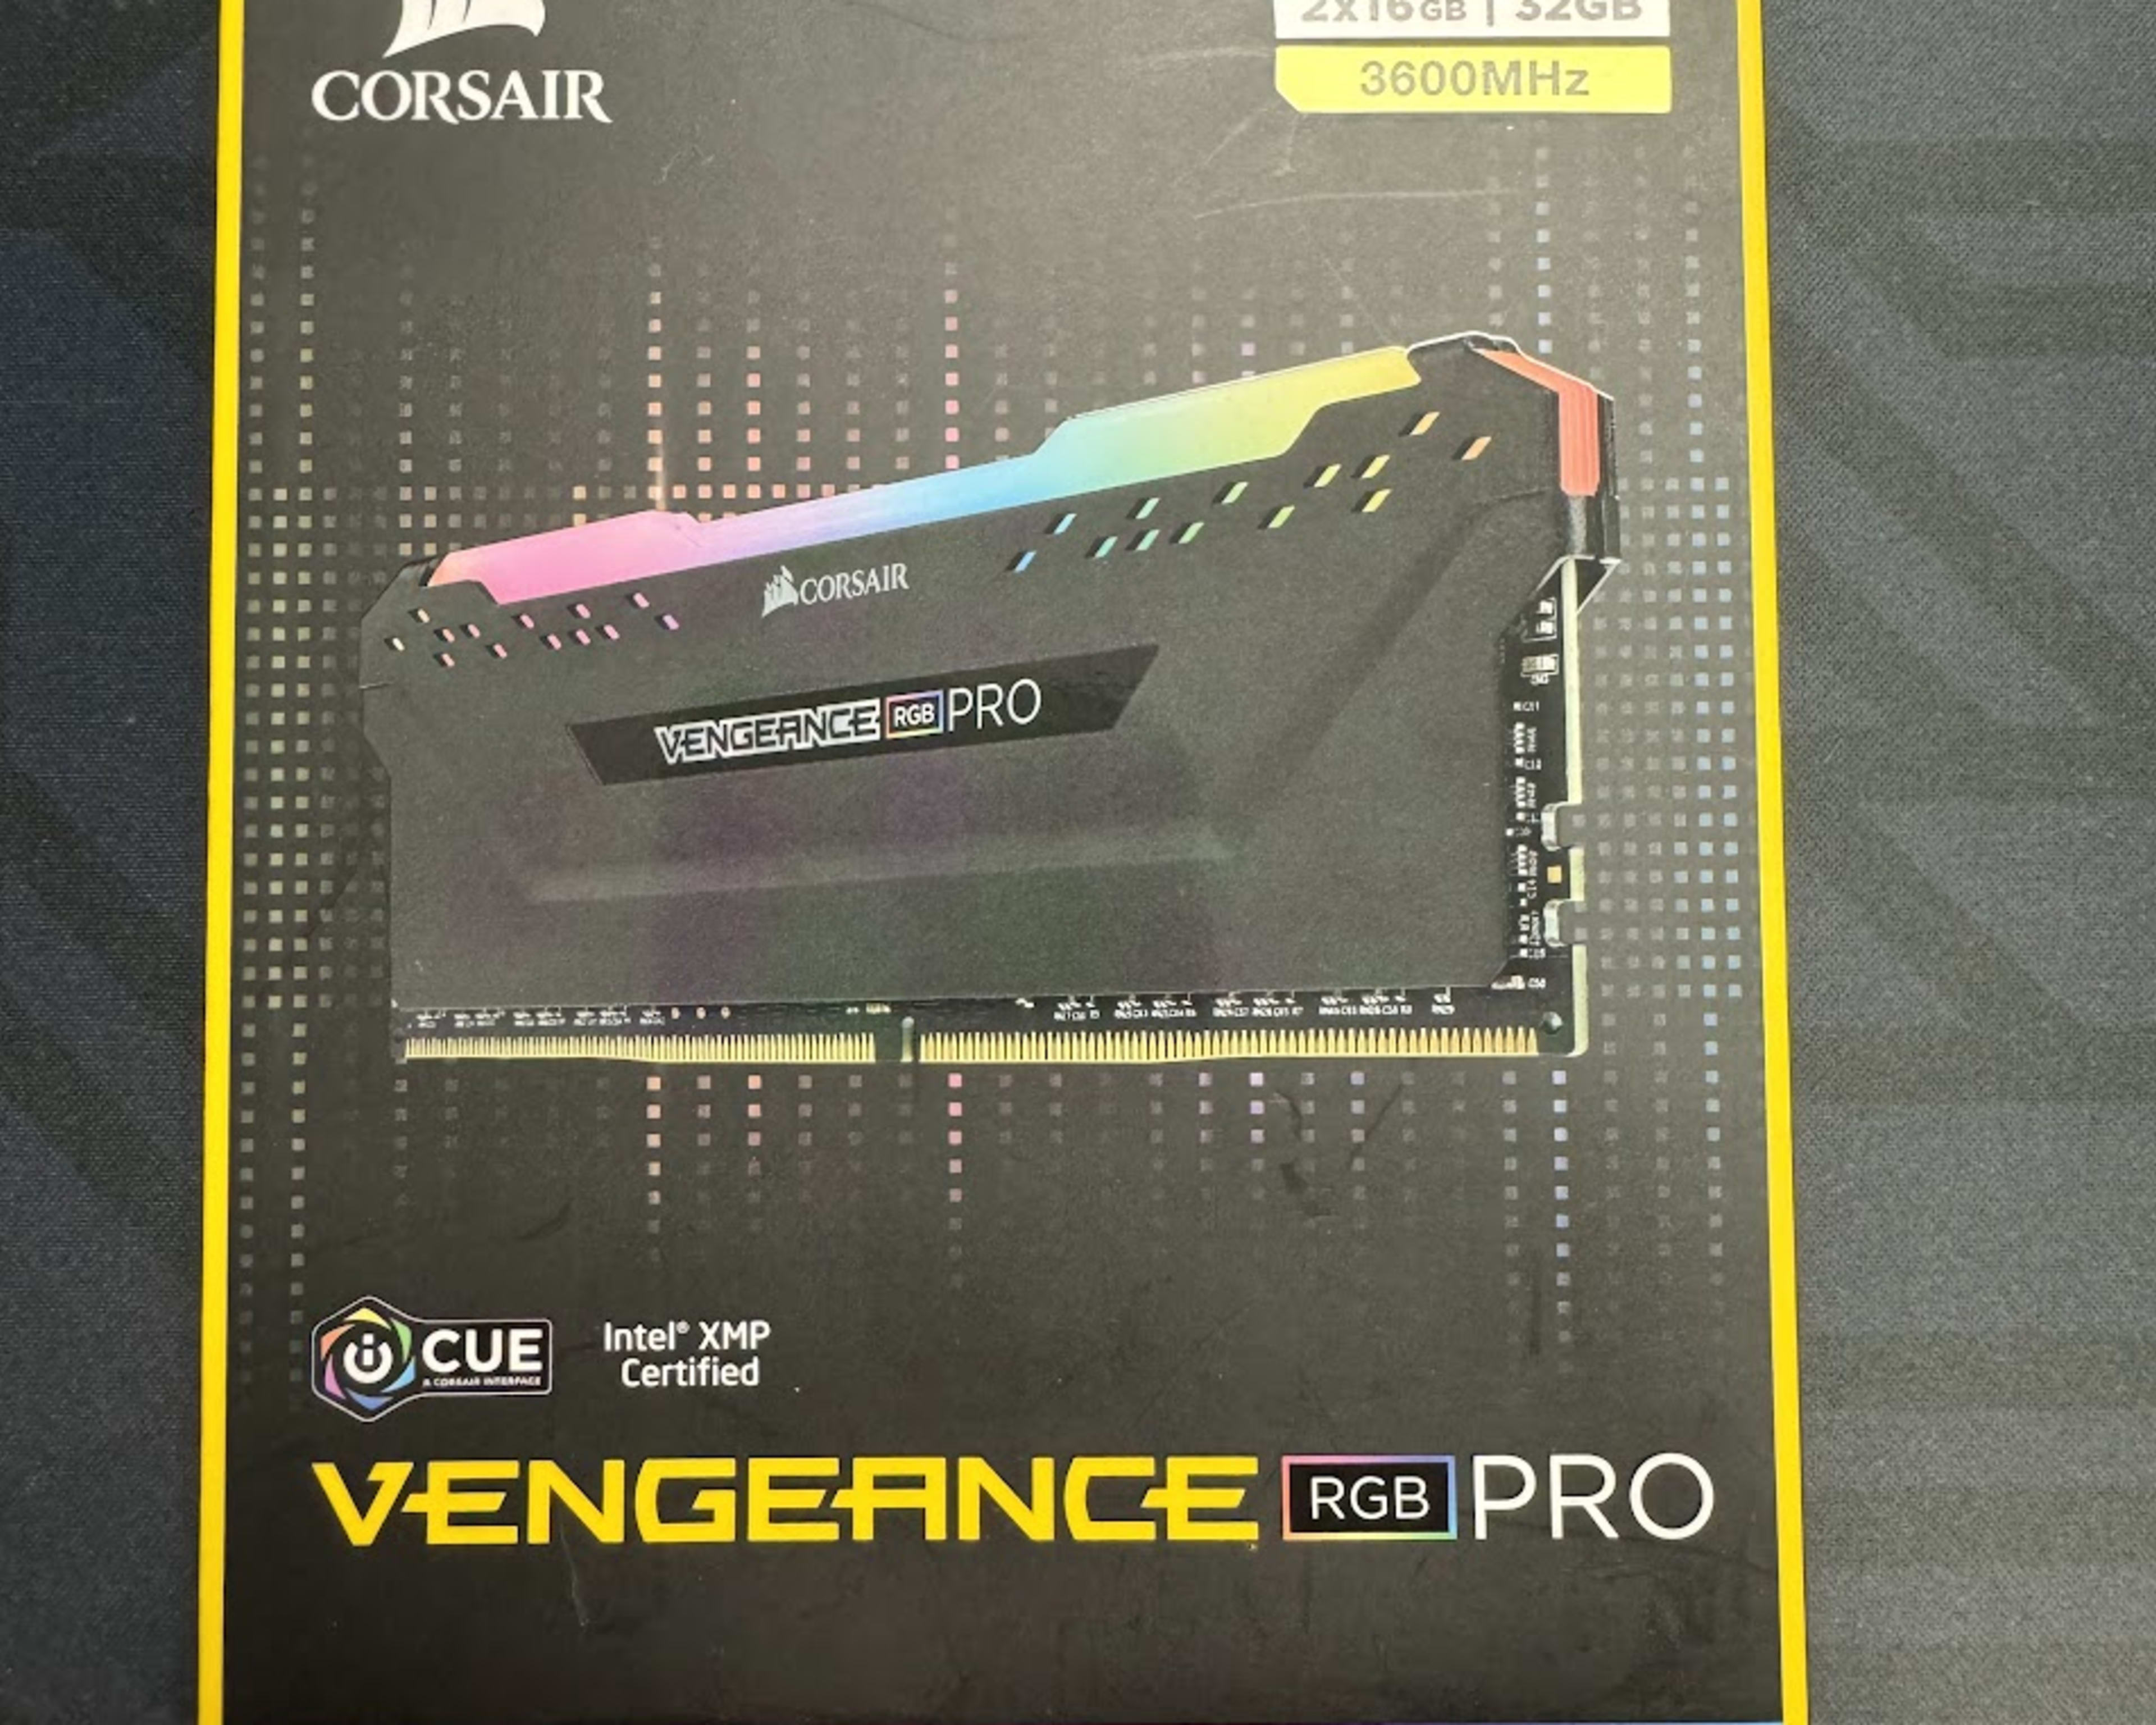 Corsair Vengance RGB Pro (32GB Kit / 2x16GB / DDR4)